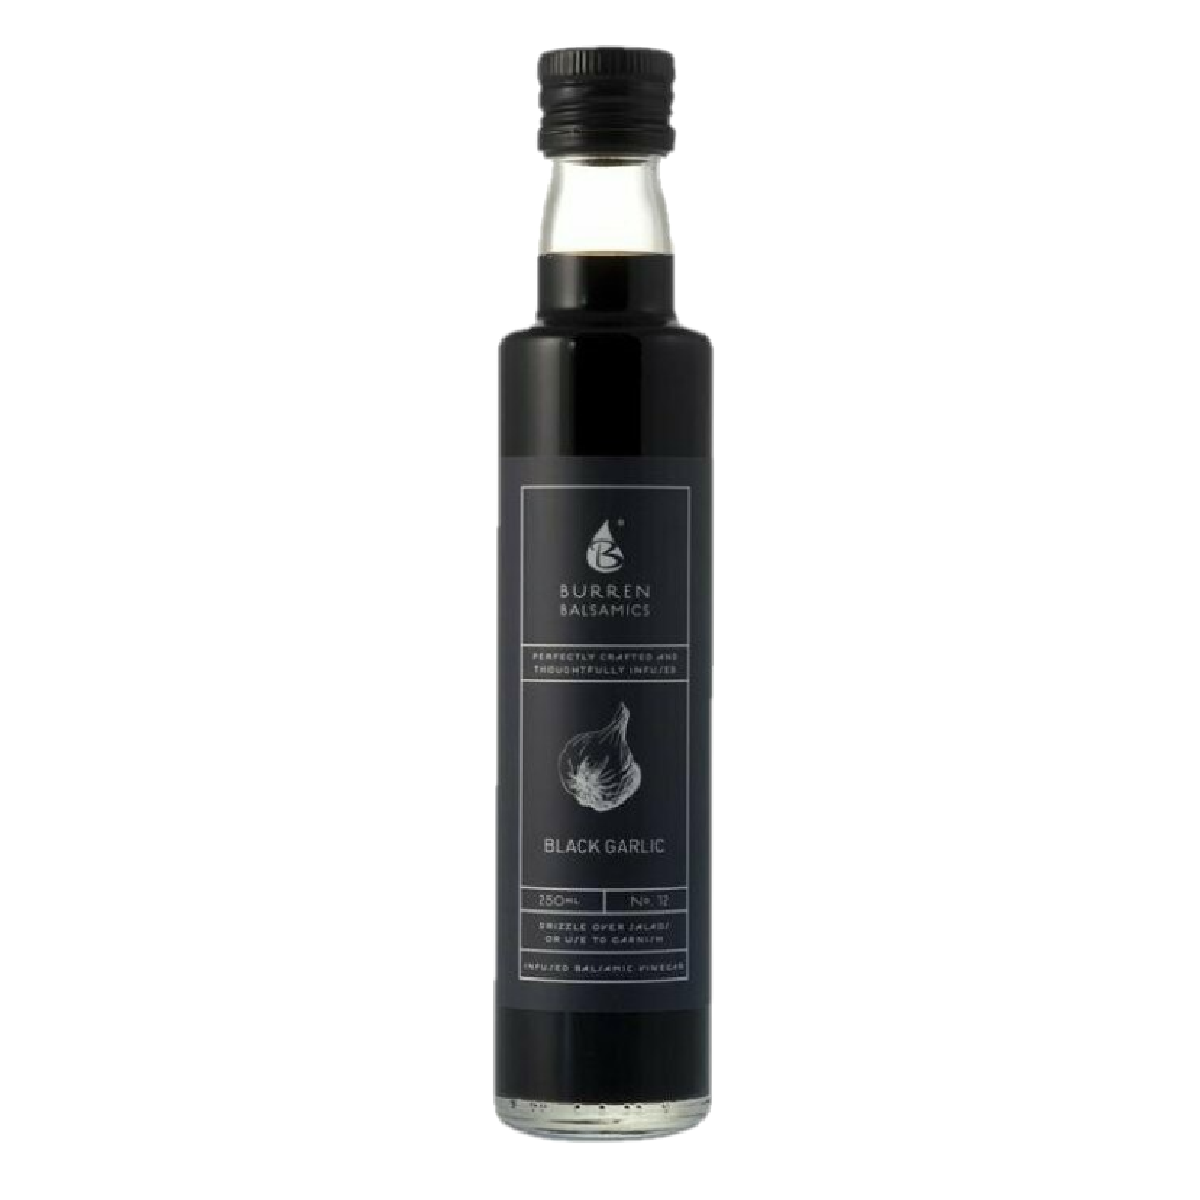 Burren Balsamics Black Garlic Balsamic Vinegar 250ml